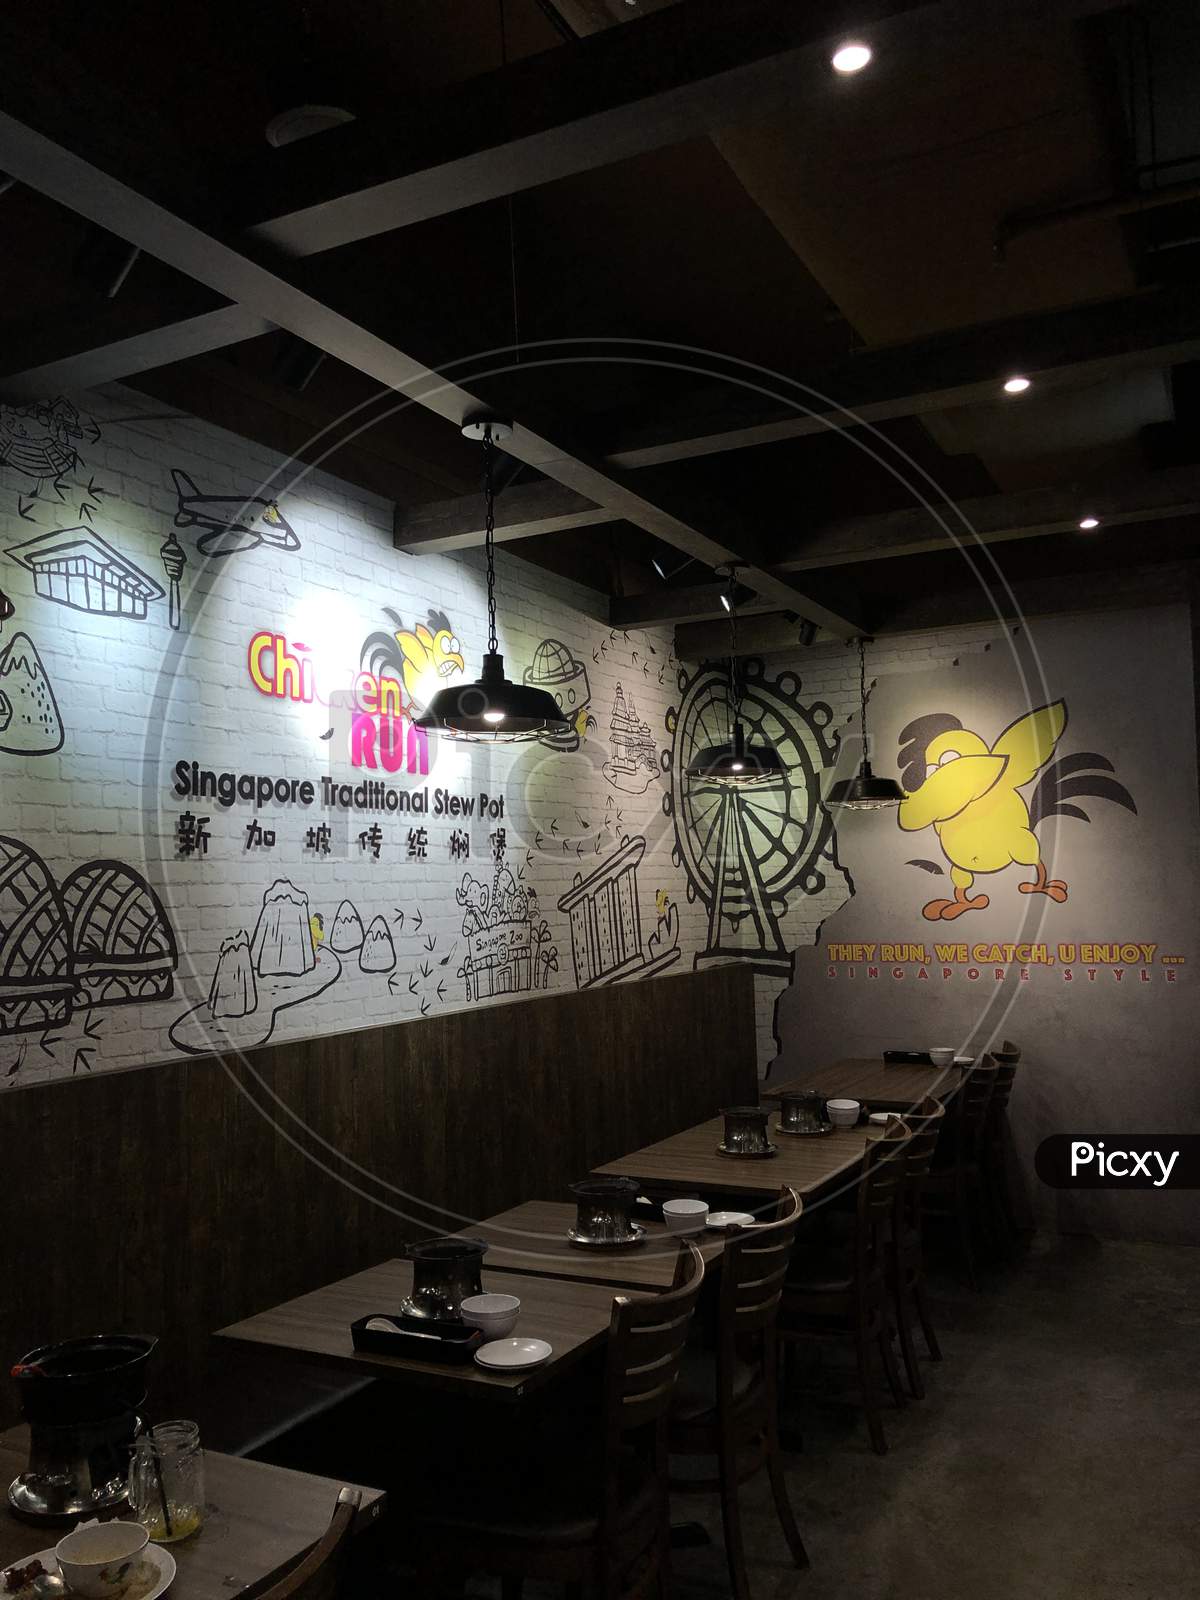 Chicken Run Restaurant at Paya Lebar Square, Singapore.